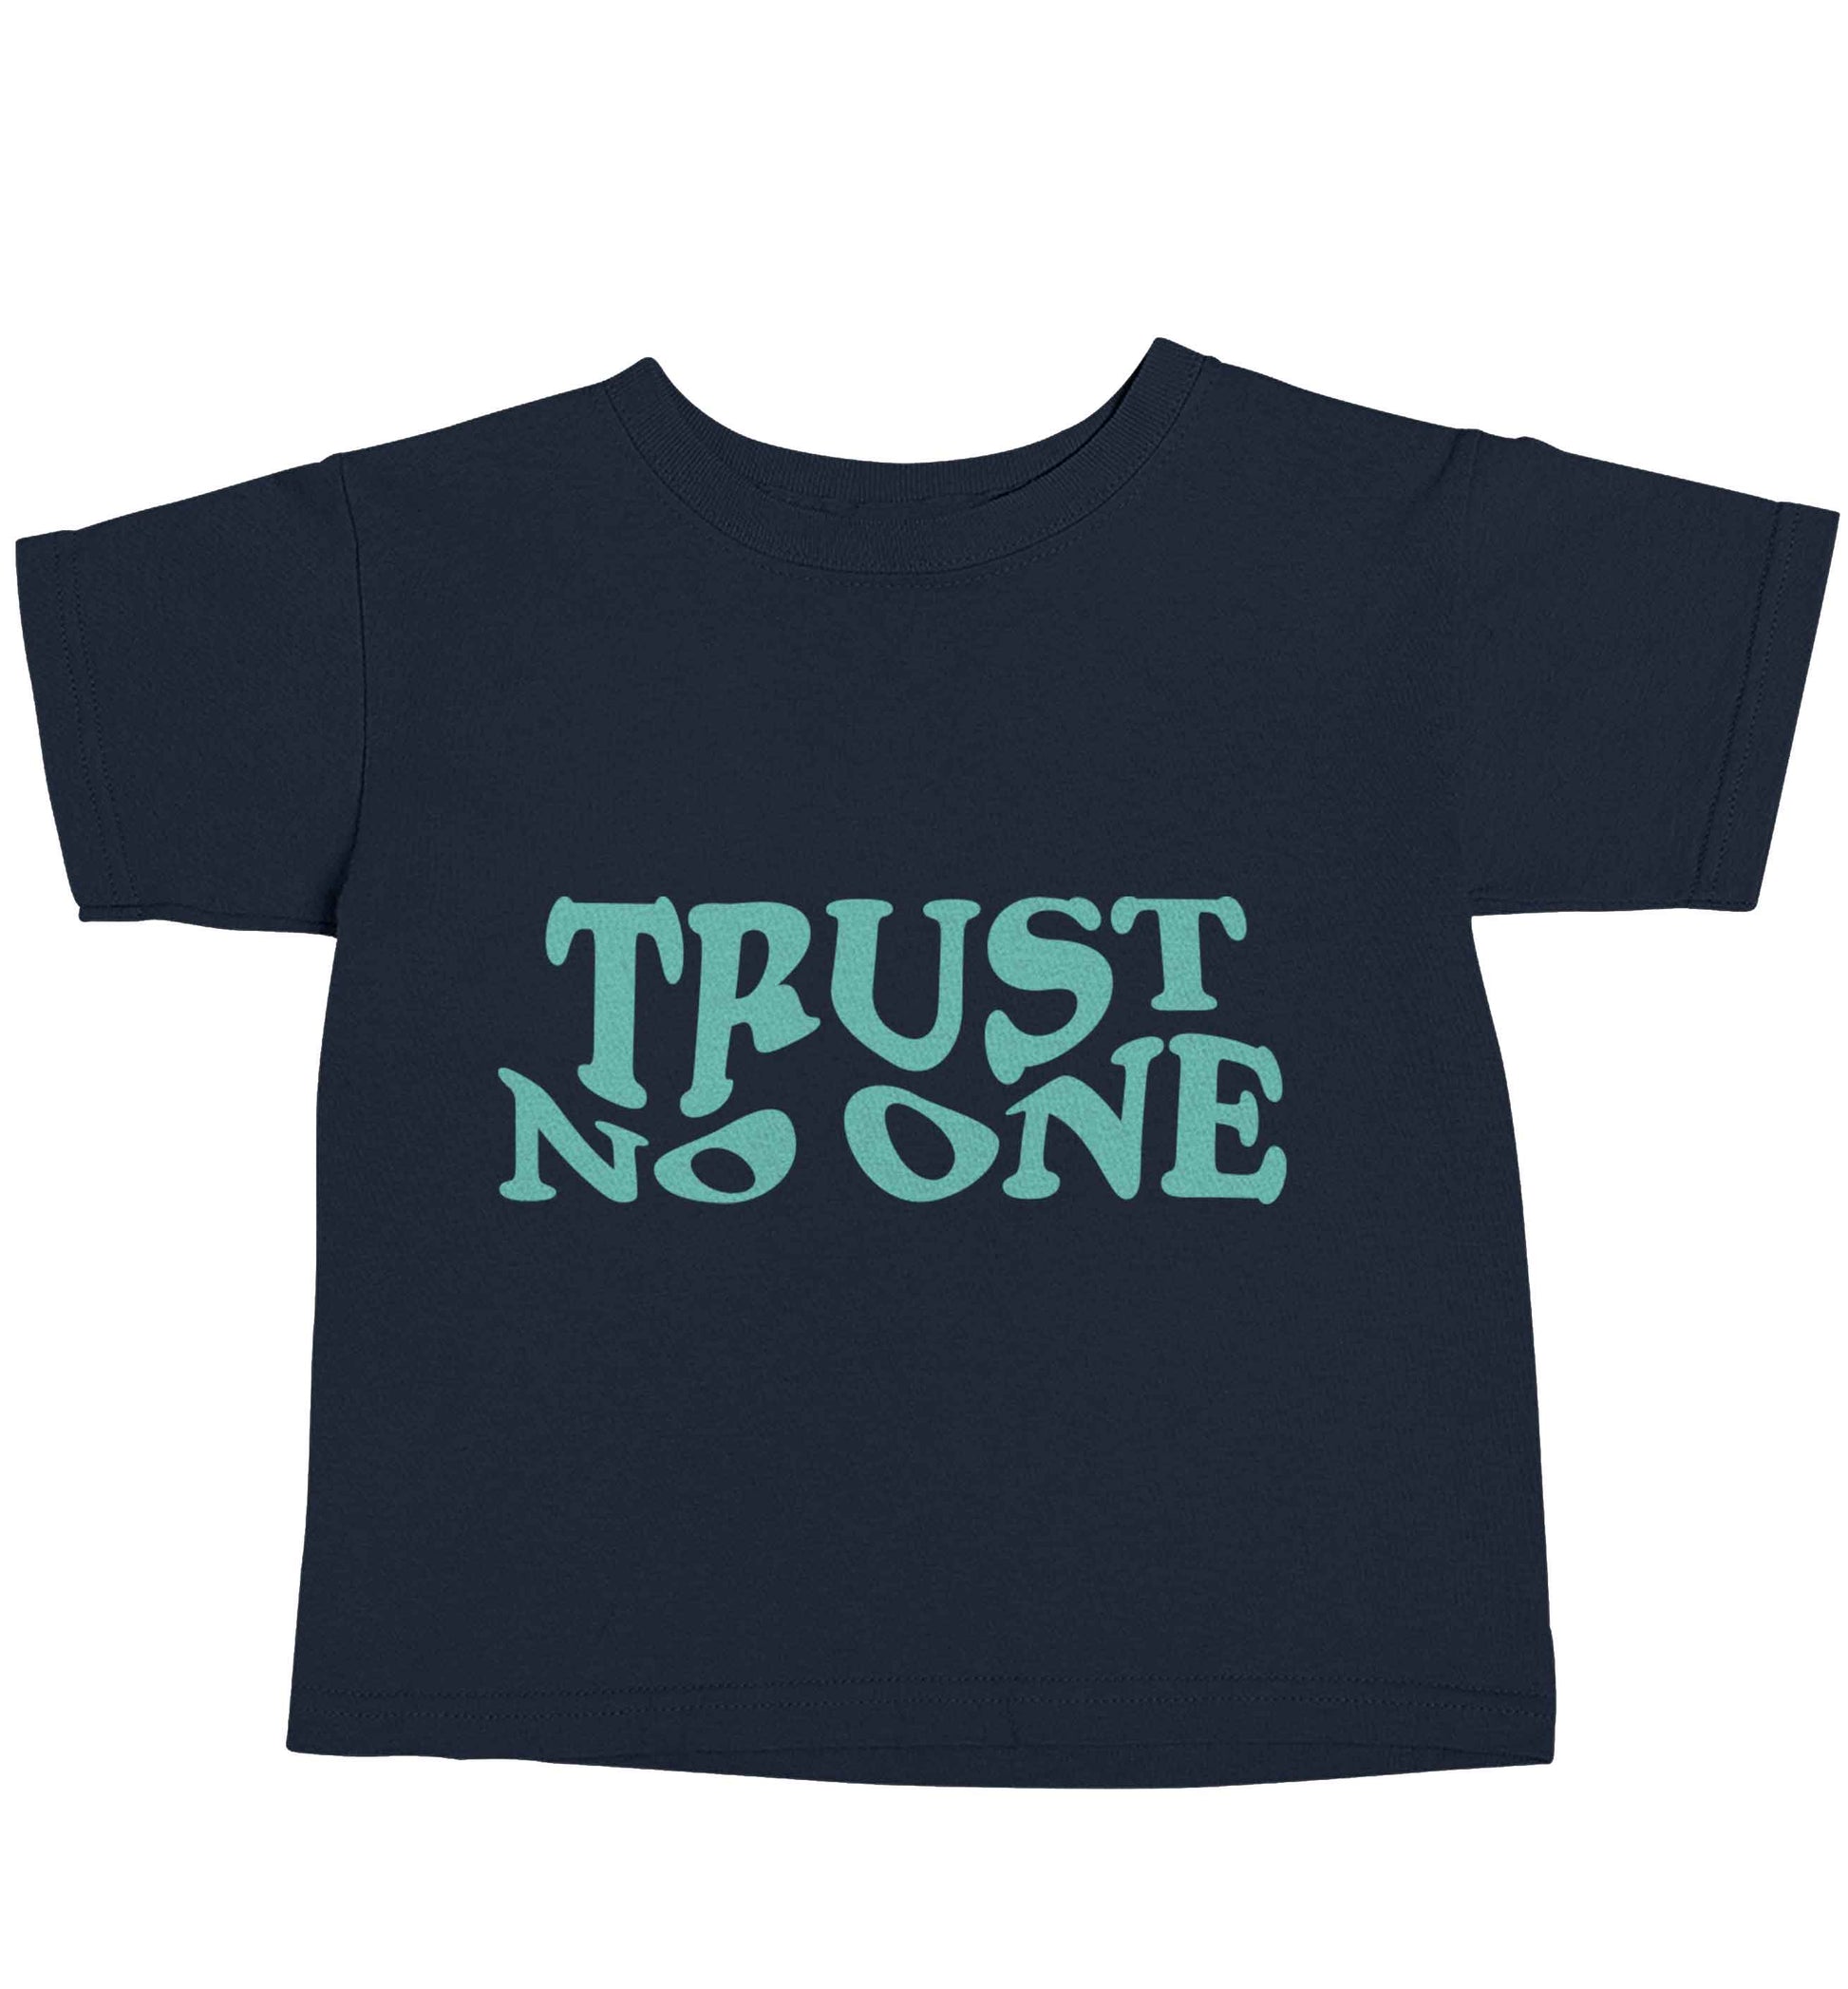 Trust no one navy baby toddler Tshirt 2 Years